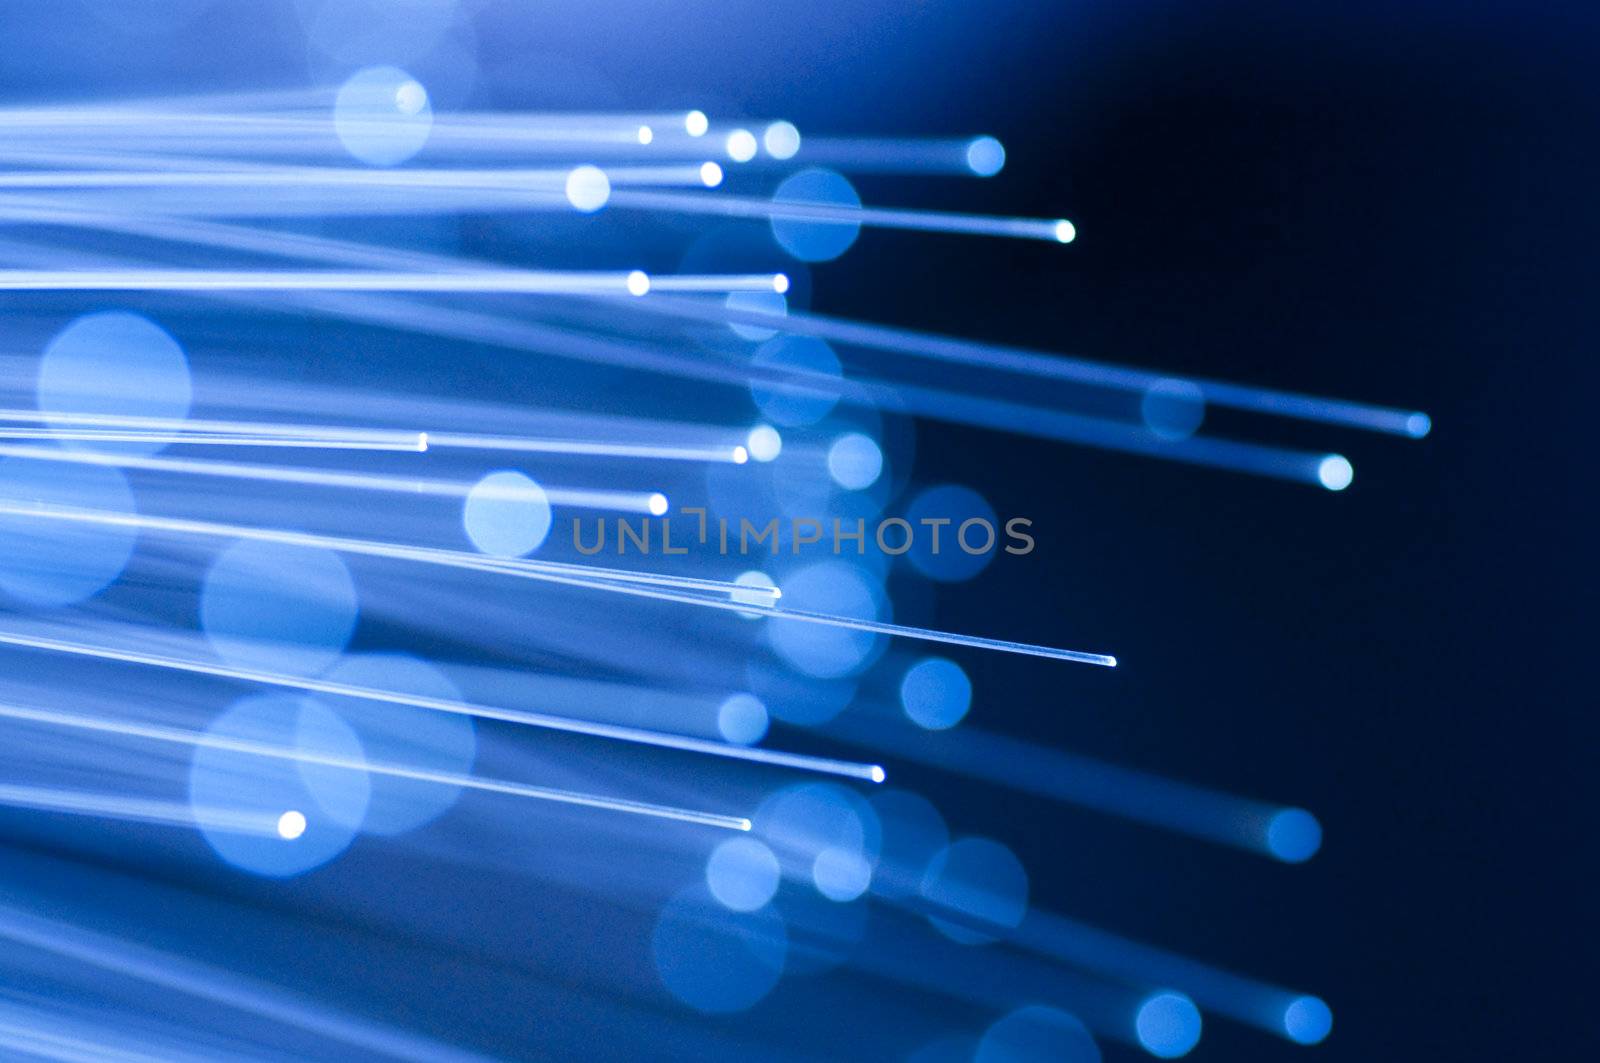 Optical fiber by FernandoCortes